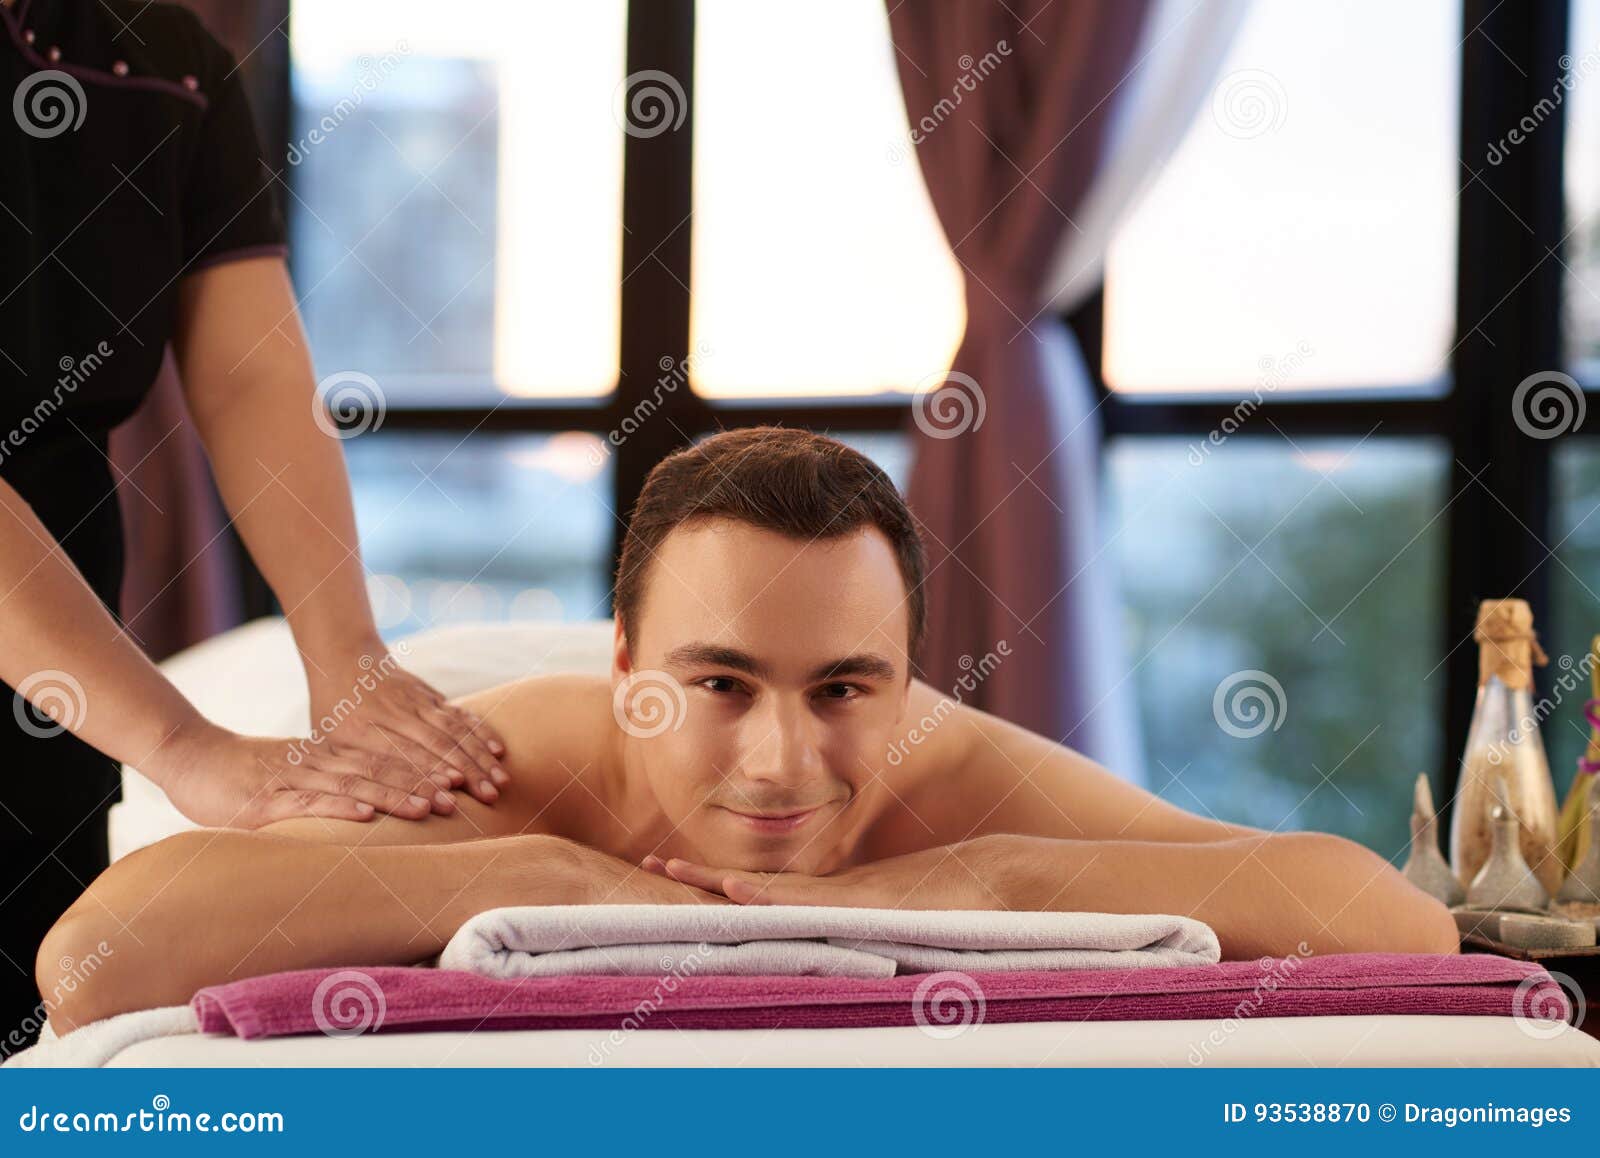 Man Love Back Massage at Spa Stock Image - Image of face, medicine:  211184165